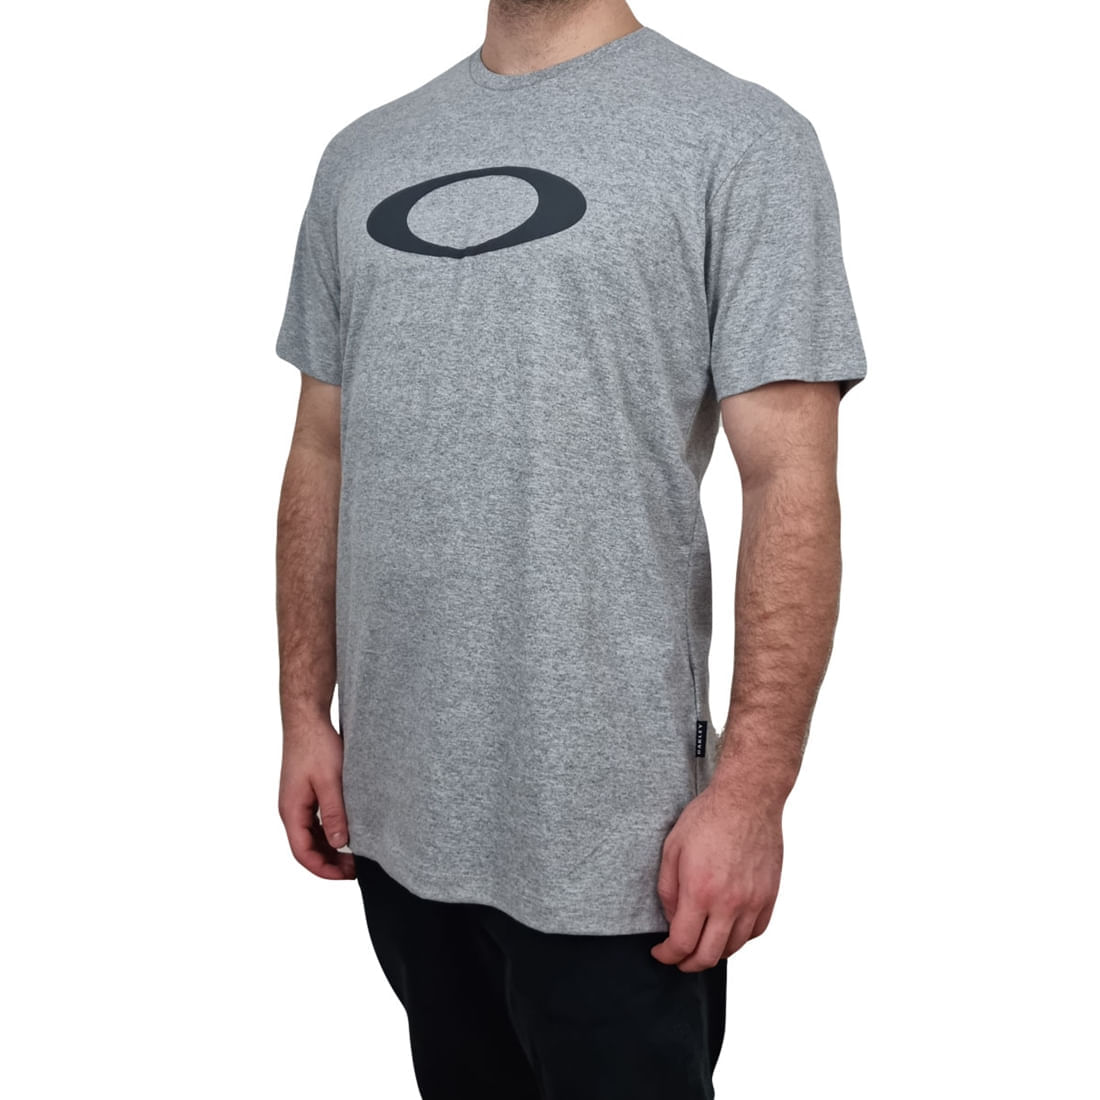 Camiseta Oakley Silk Logo Graphic Tee White - Masculina